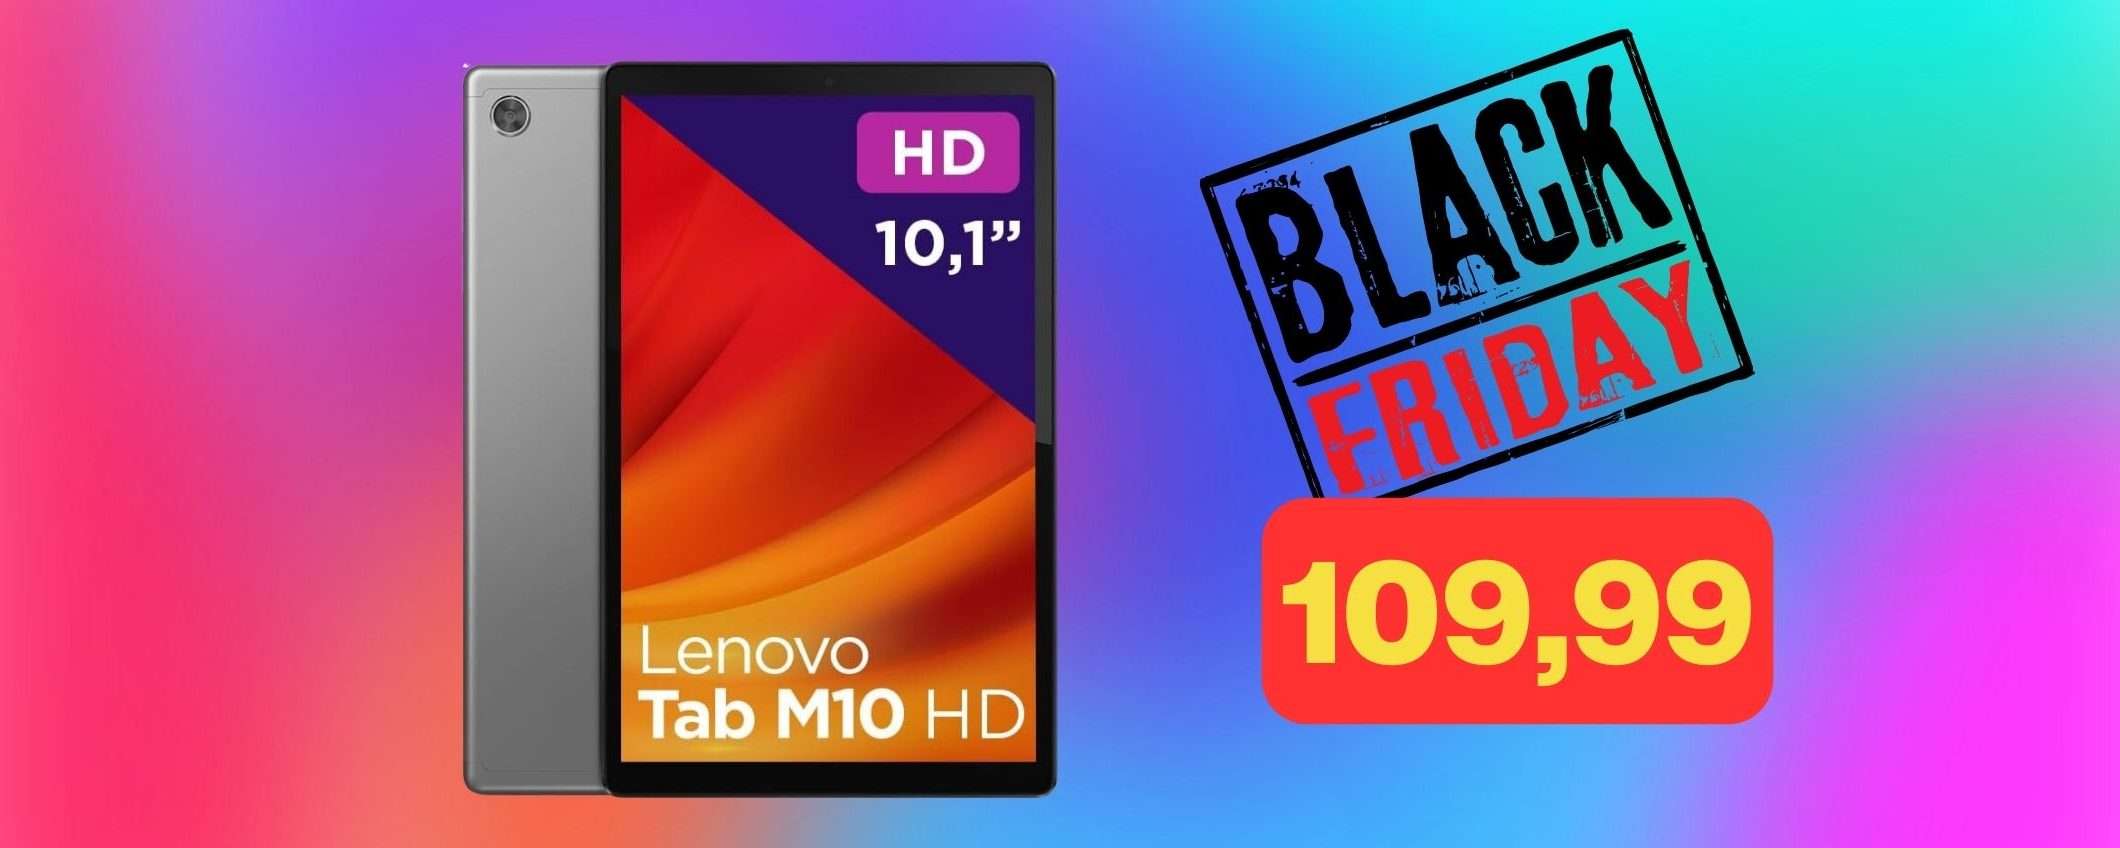 Lenovo Tab M10 HD: ottimo tablet economico in sconto Black Friday